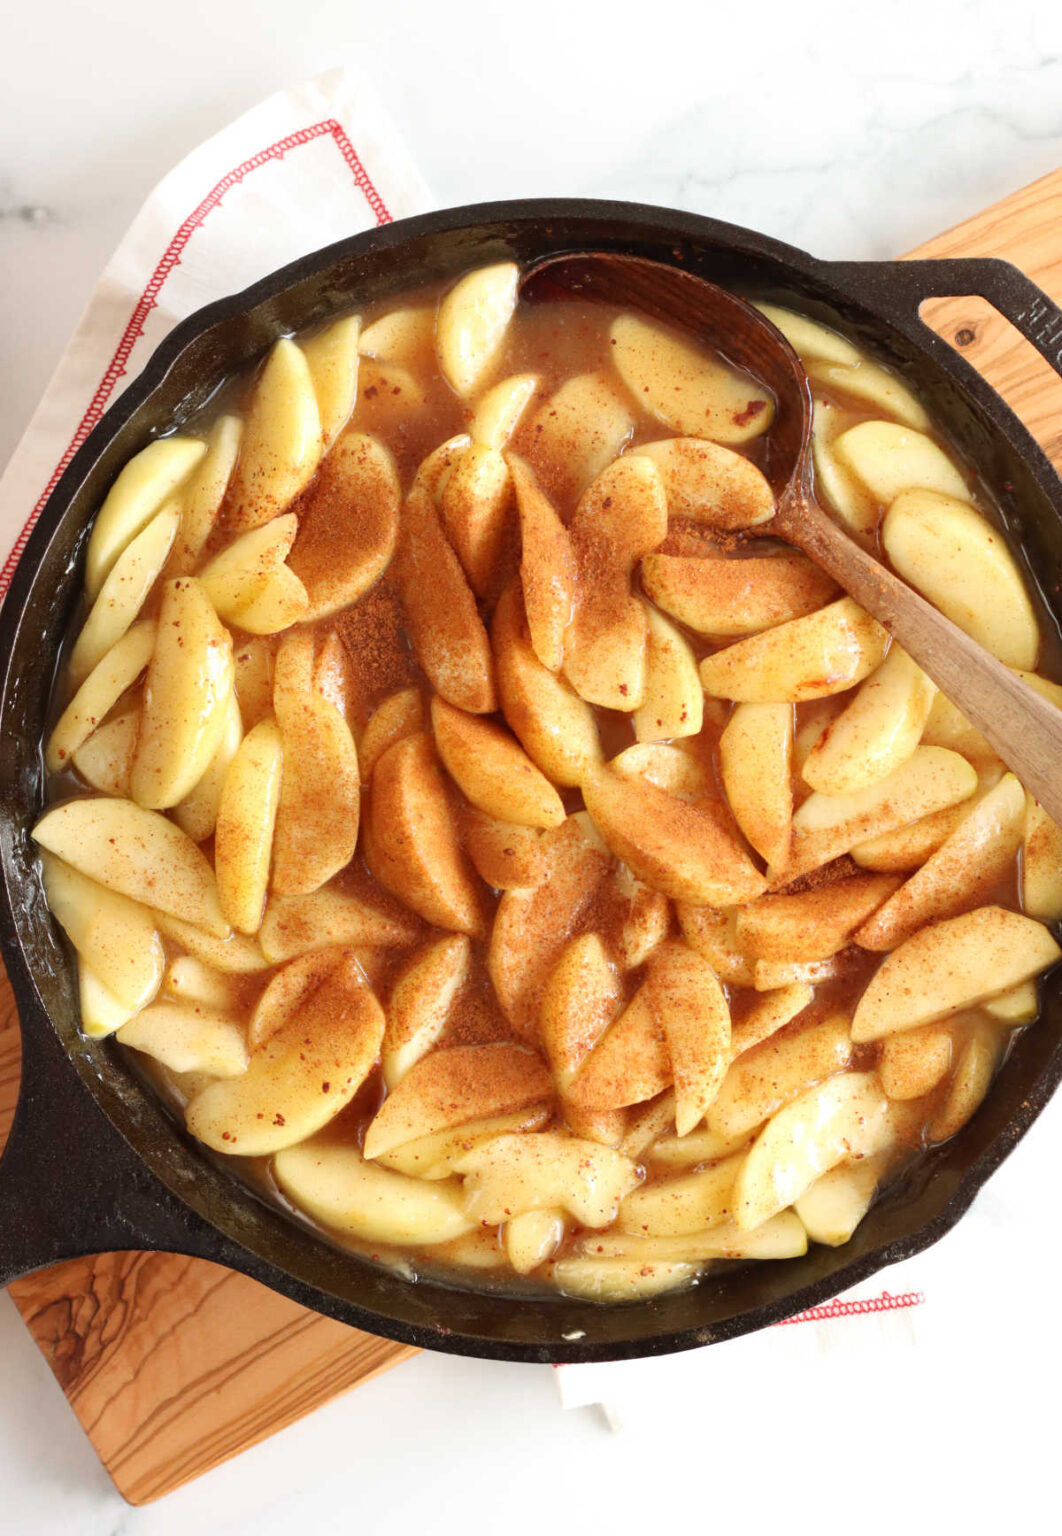 Homemade Caramel Apple Pie Recipe | A Farmgirl's Kitchen